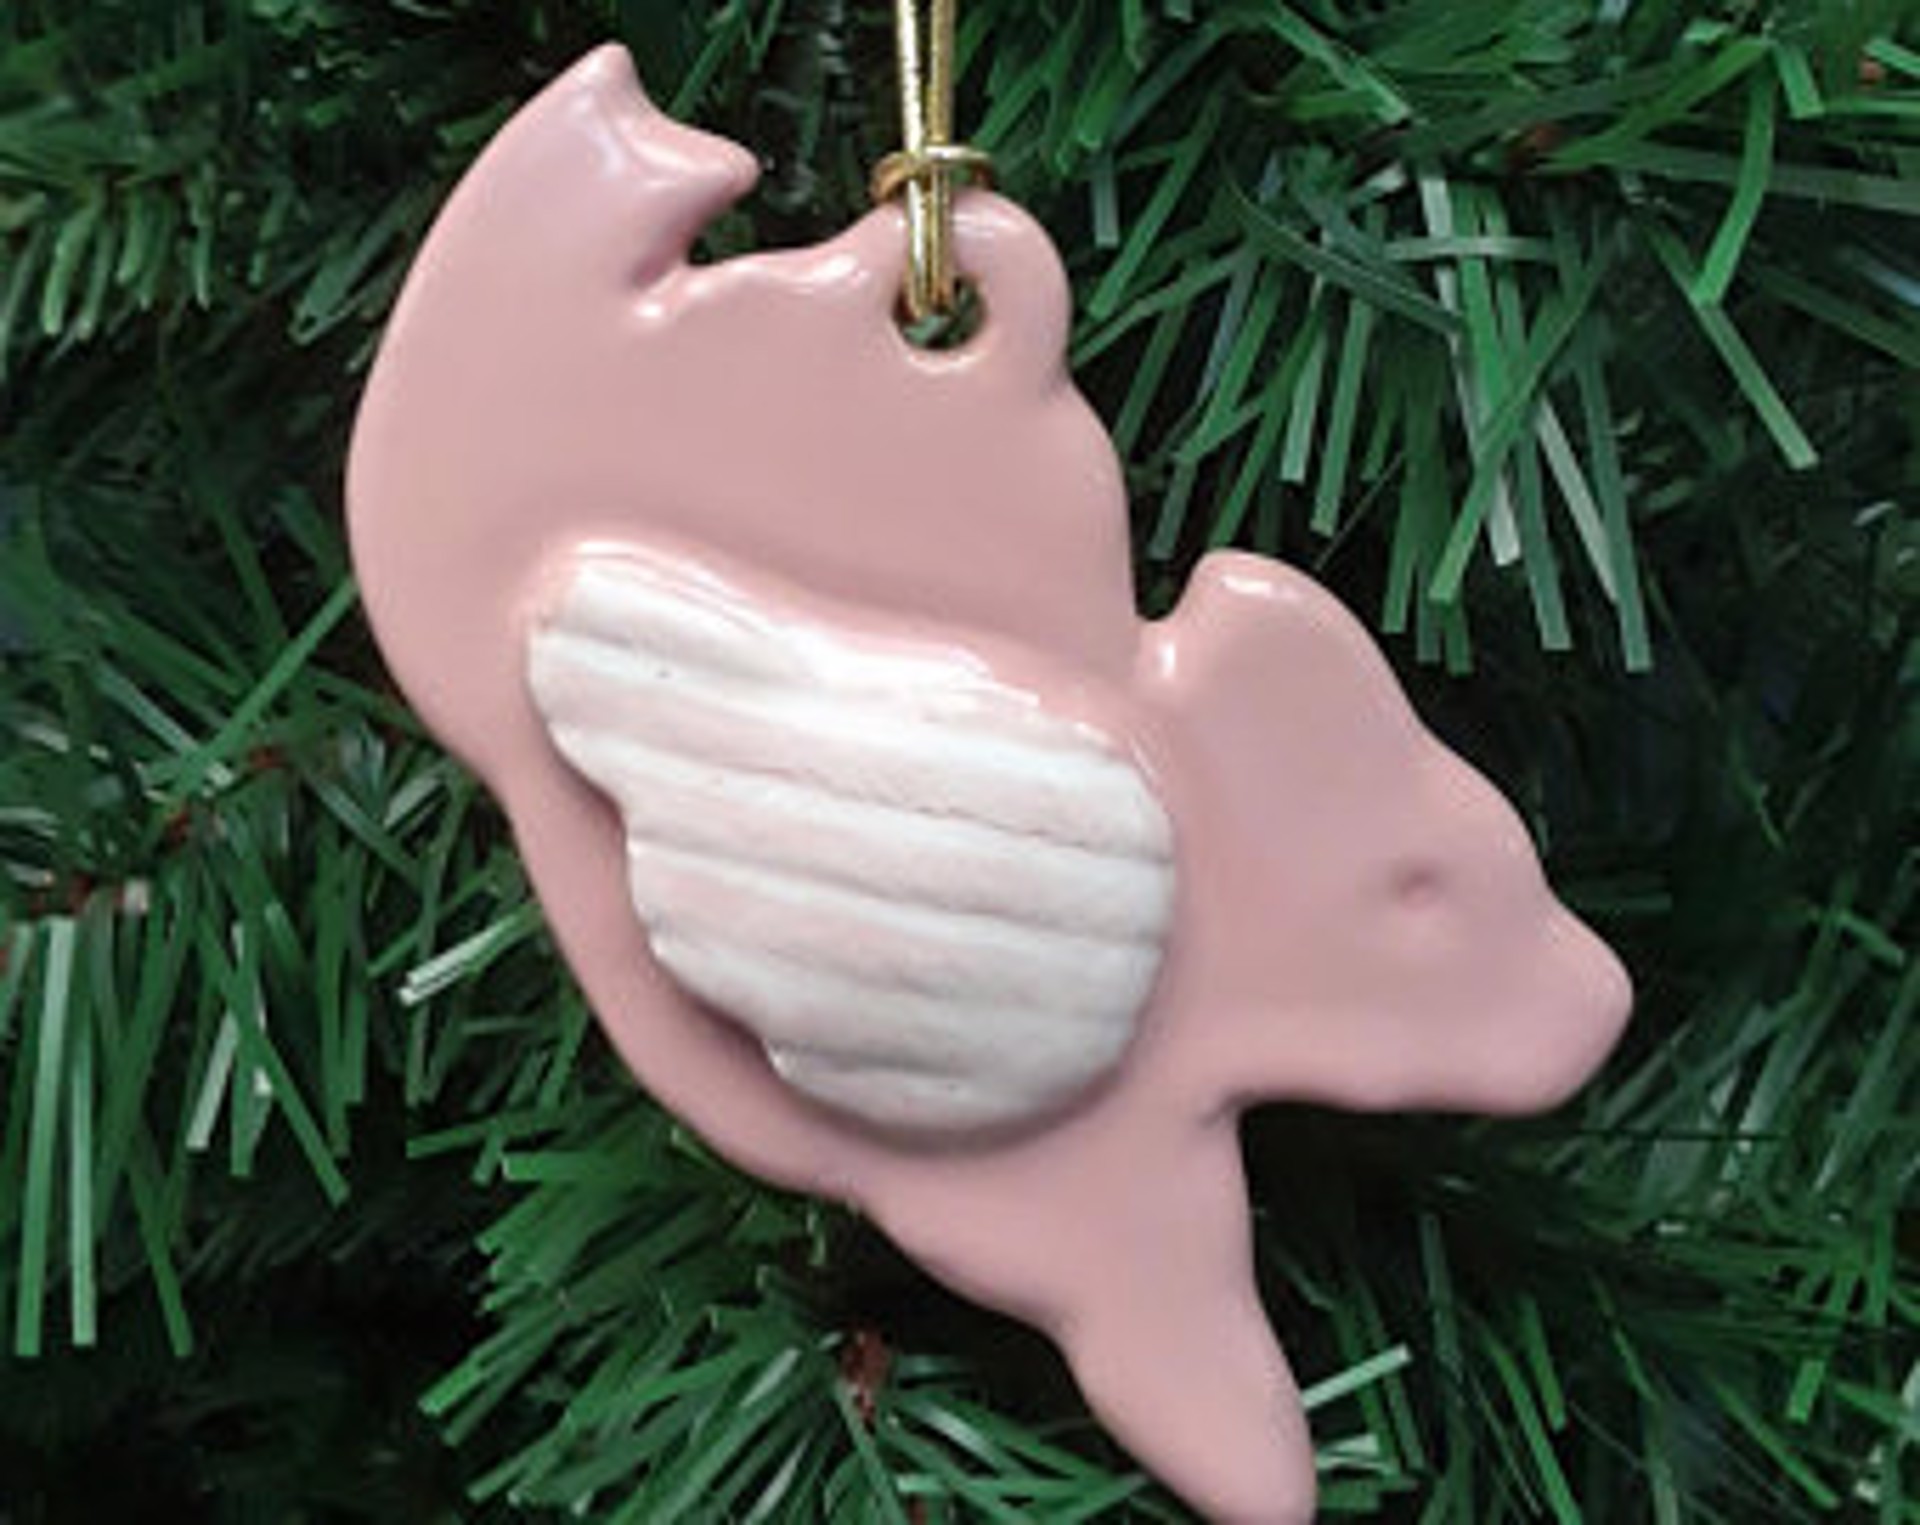 LB19 Ornament "Ham It Up" by Lin Barnhardt